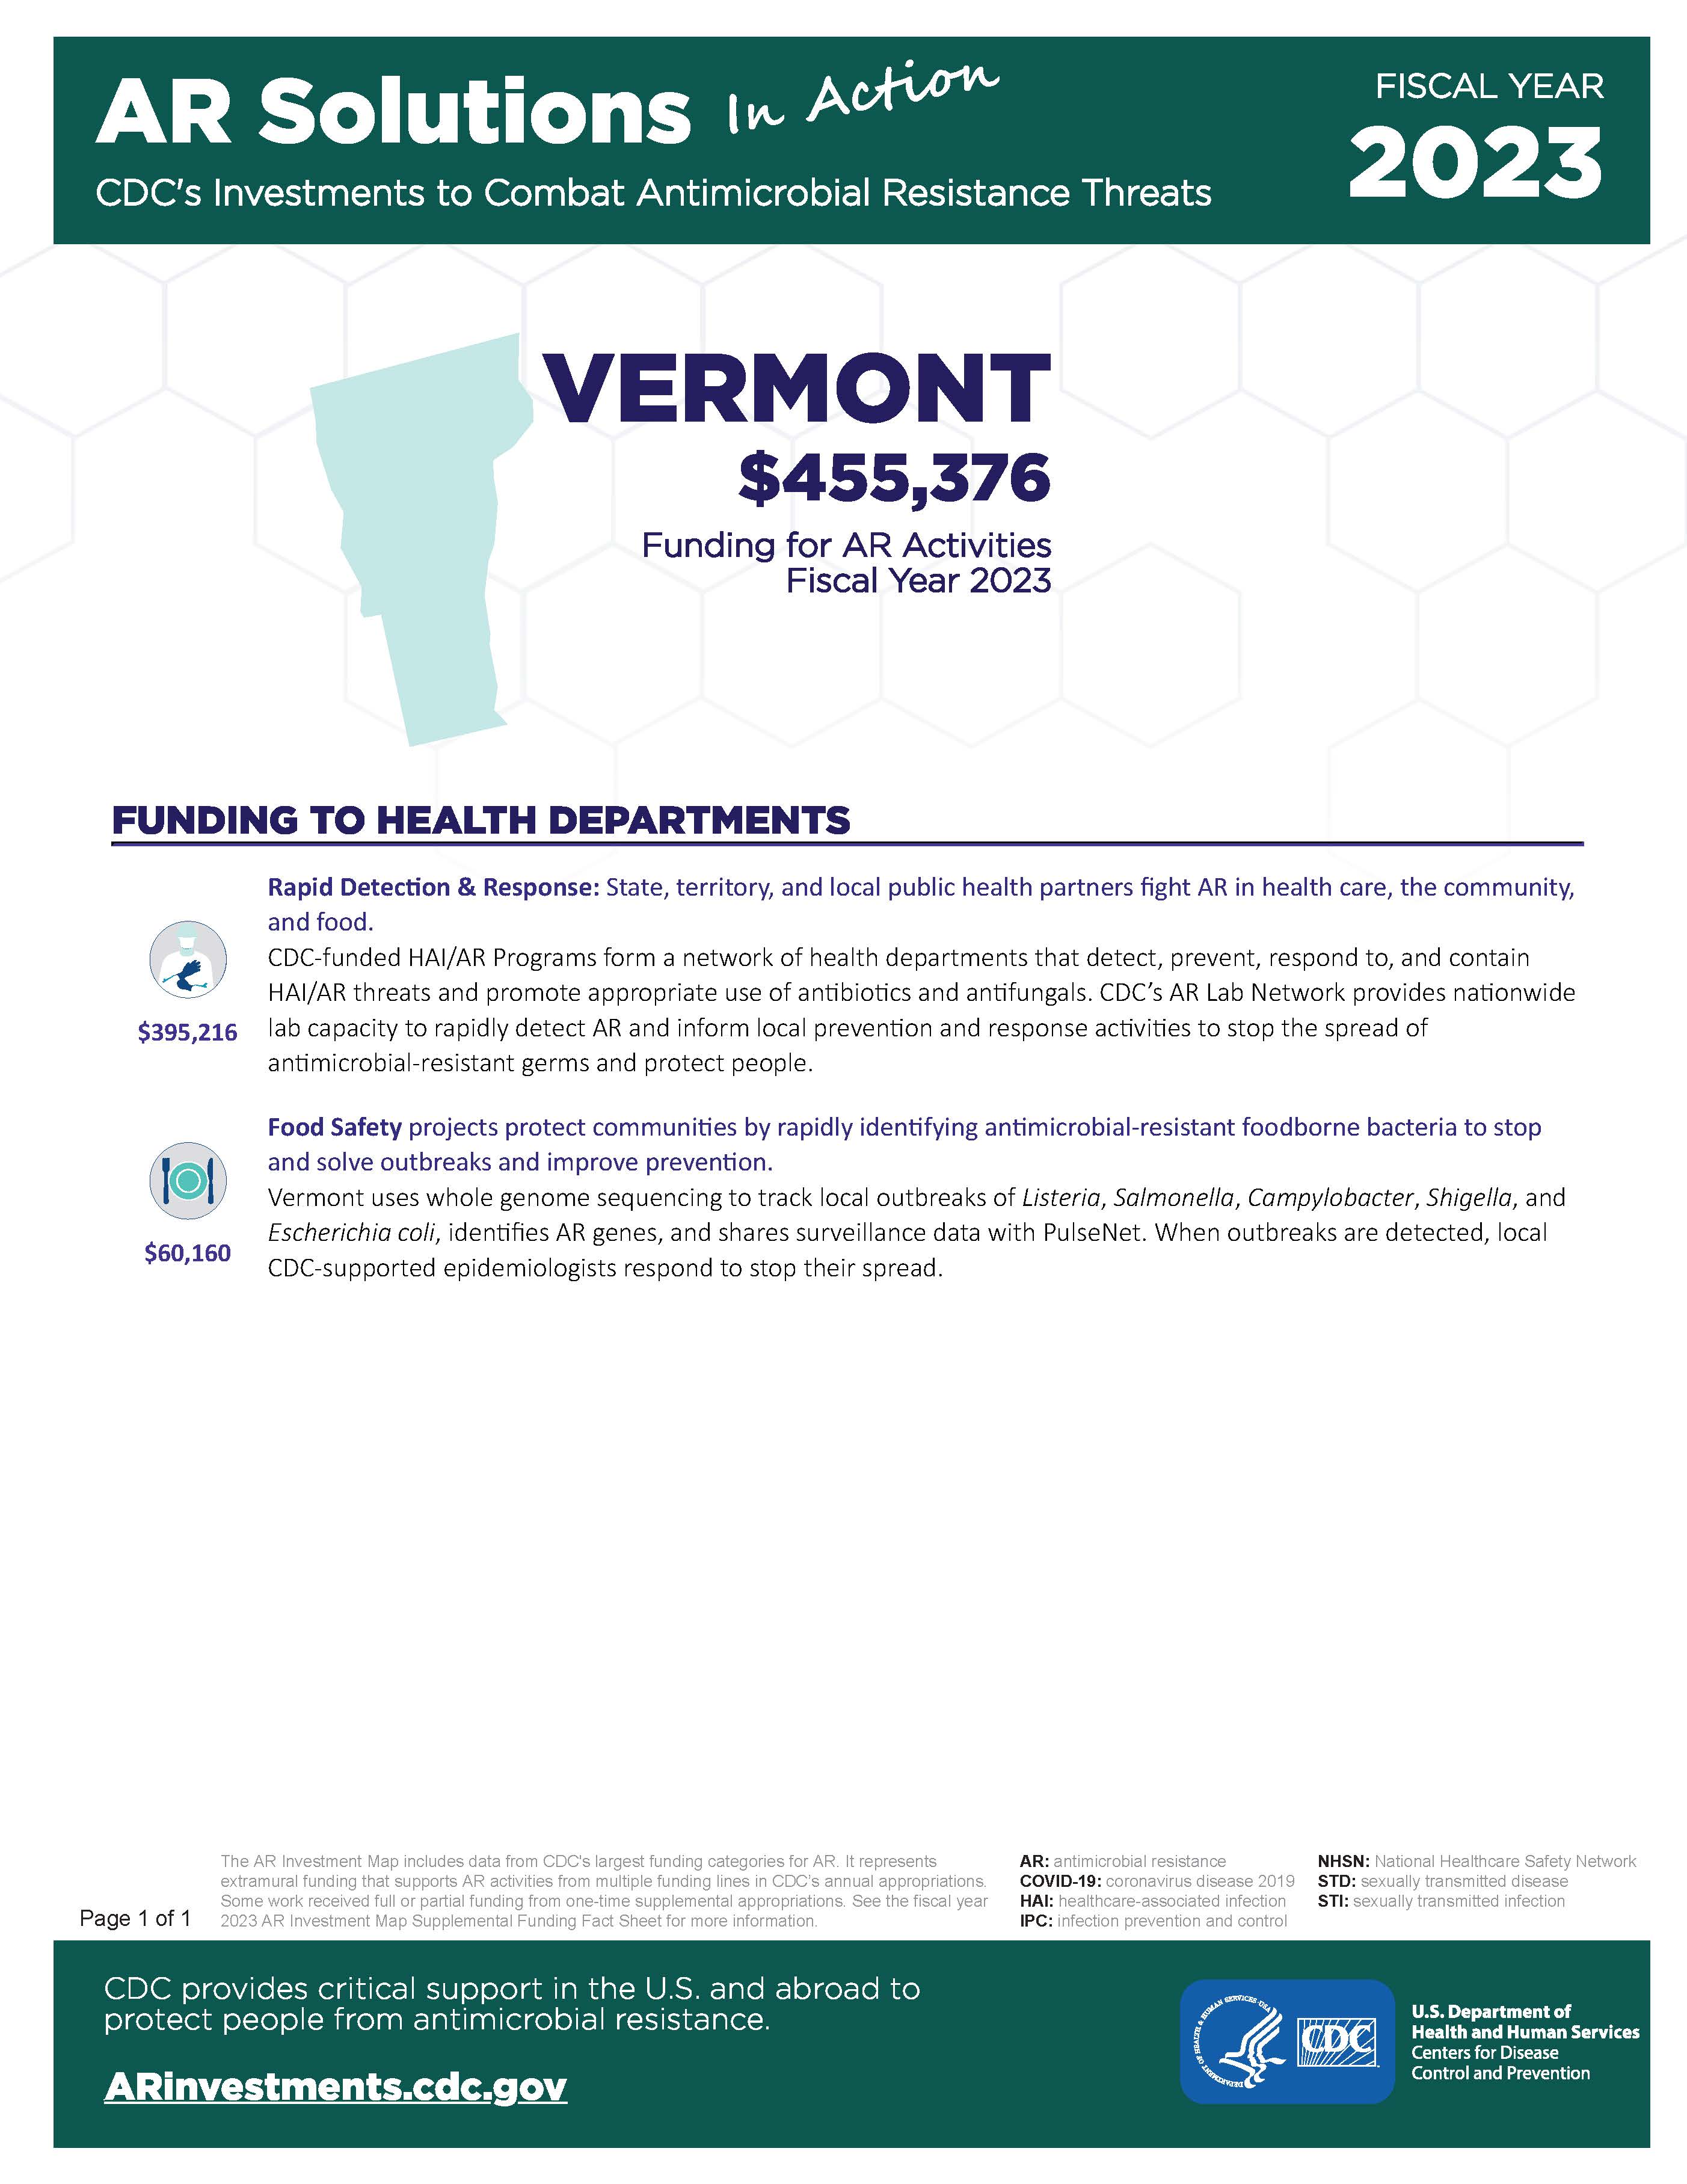 View Factsheet for Vermont